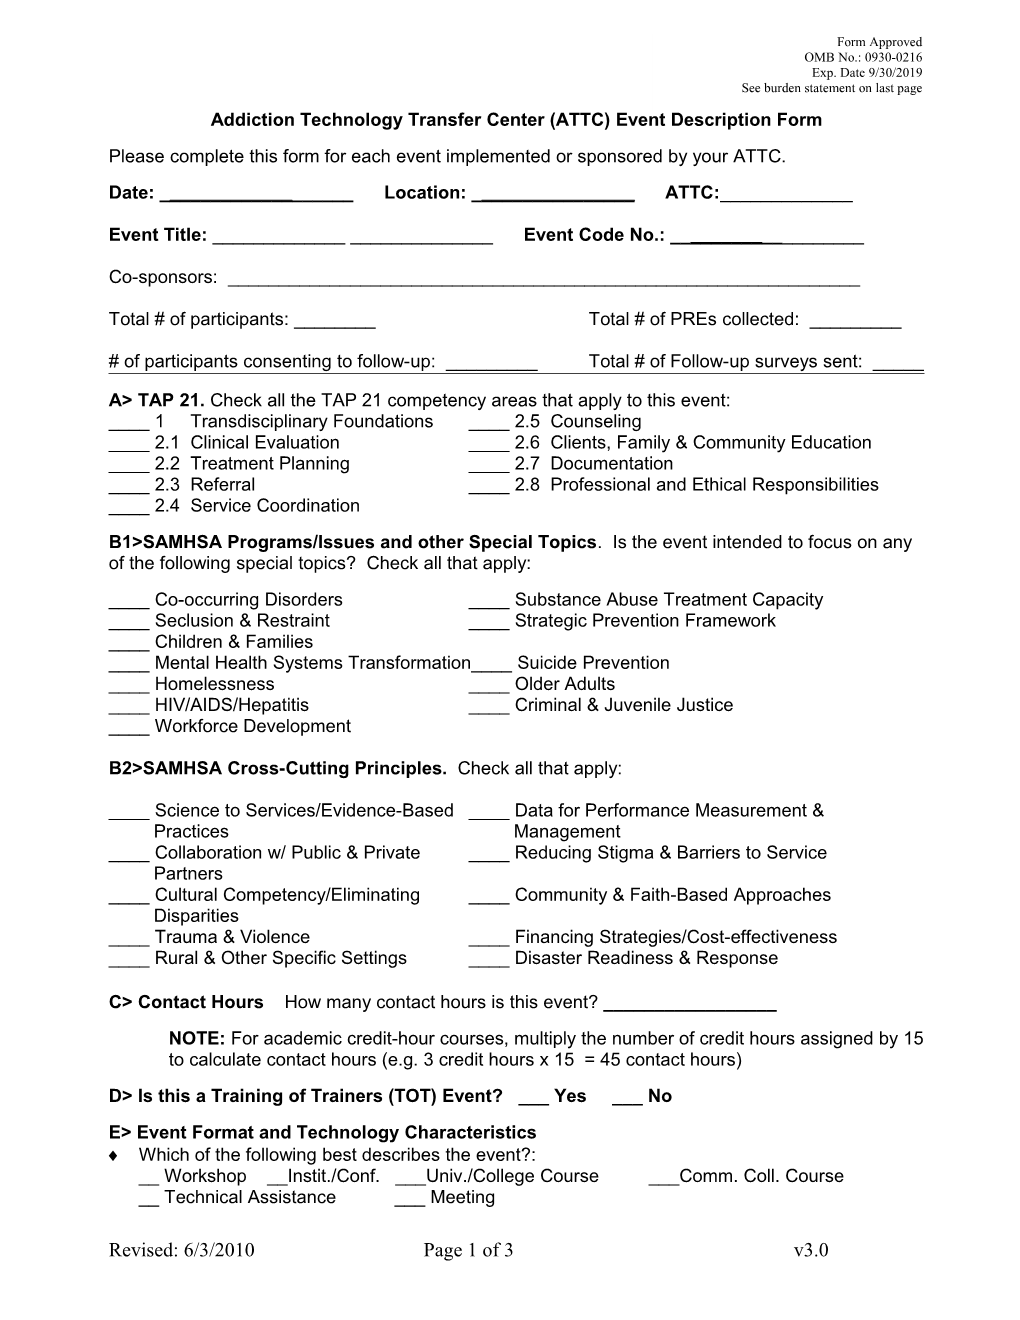 Education and Training Event Description Form